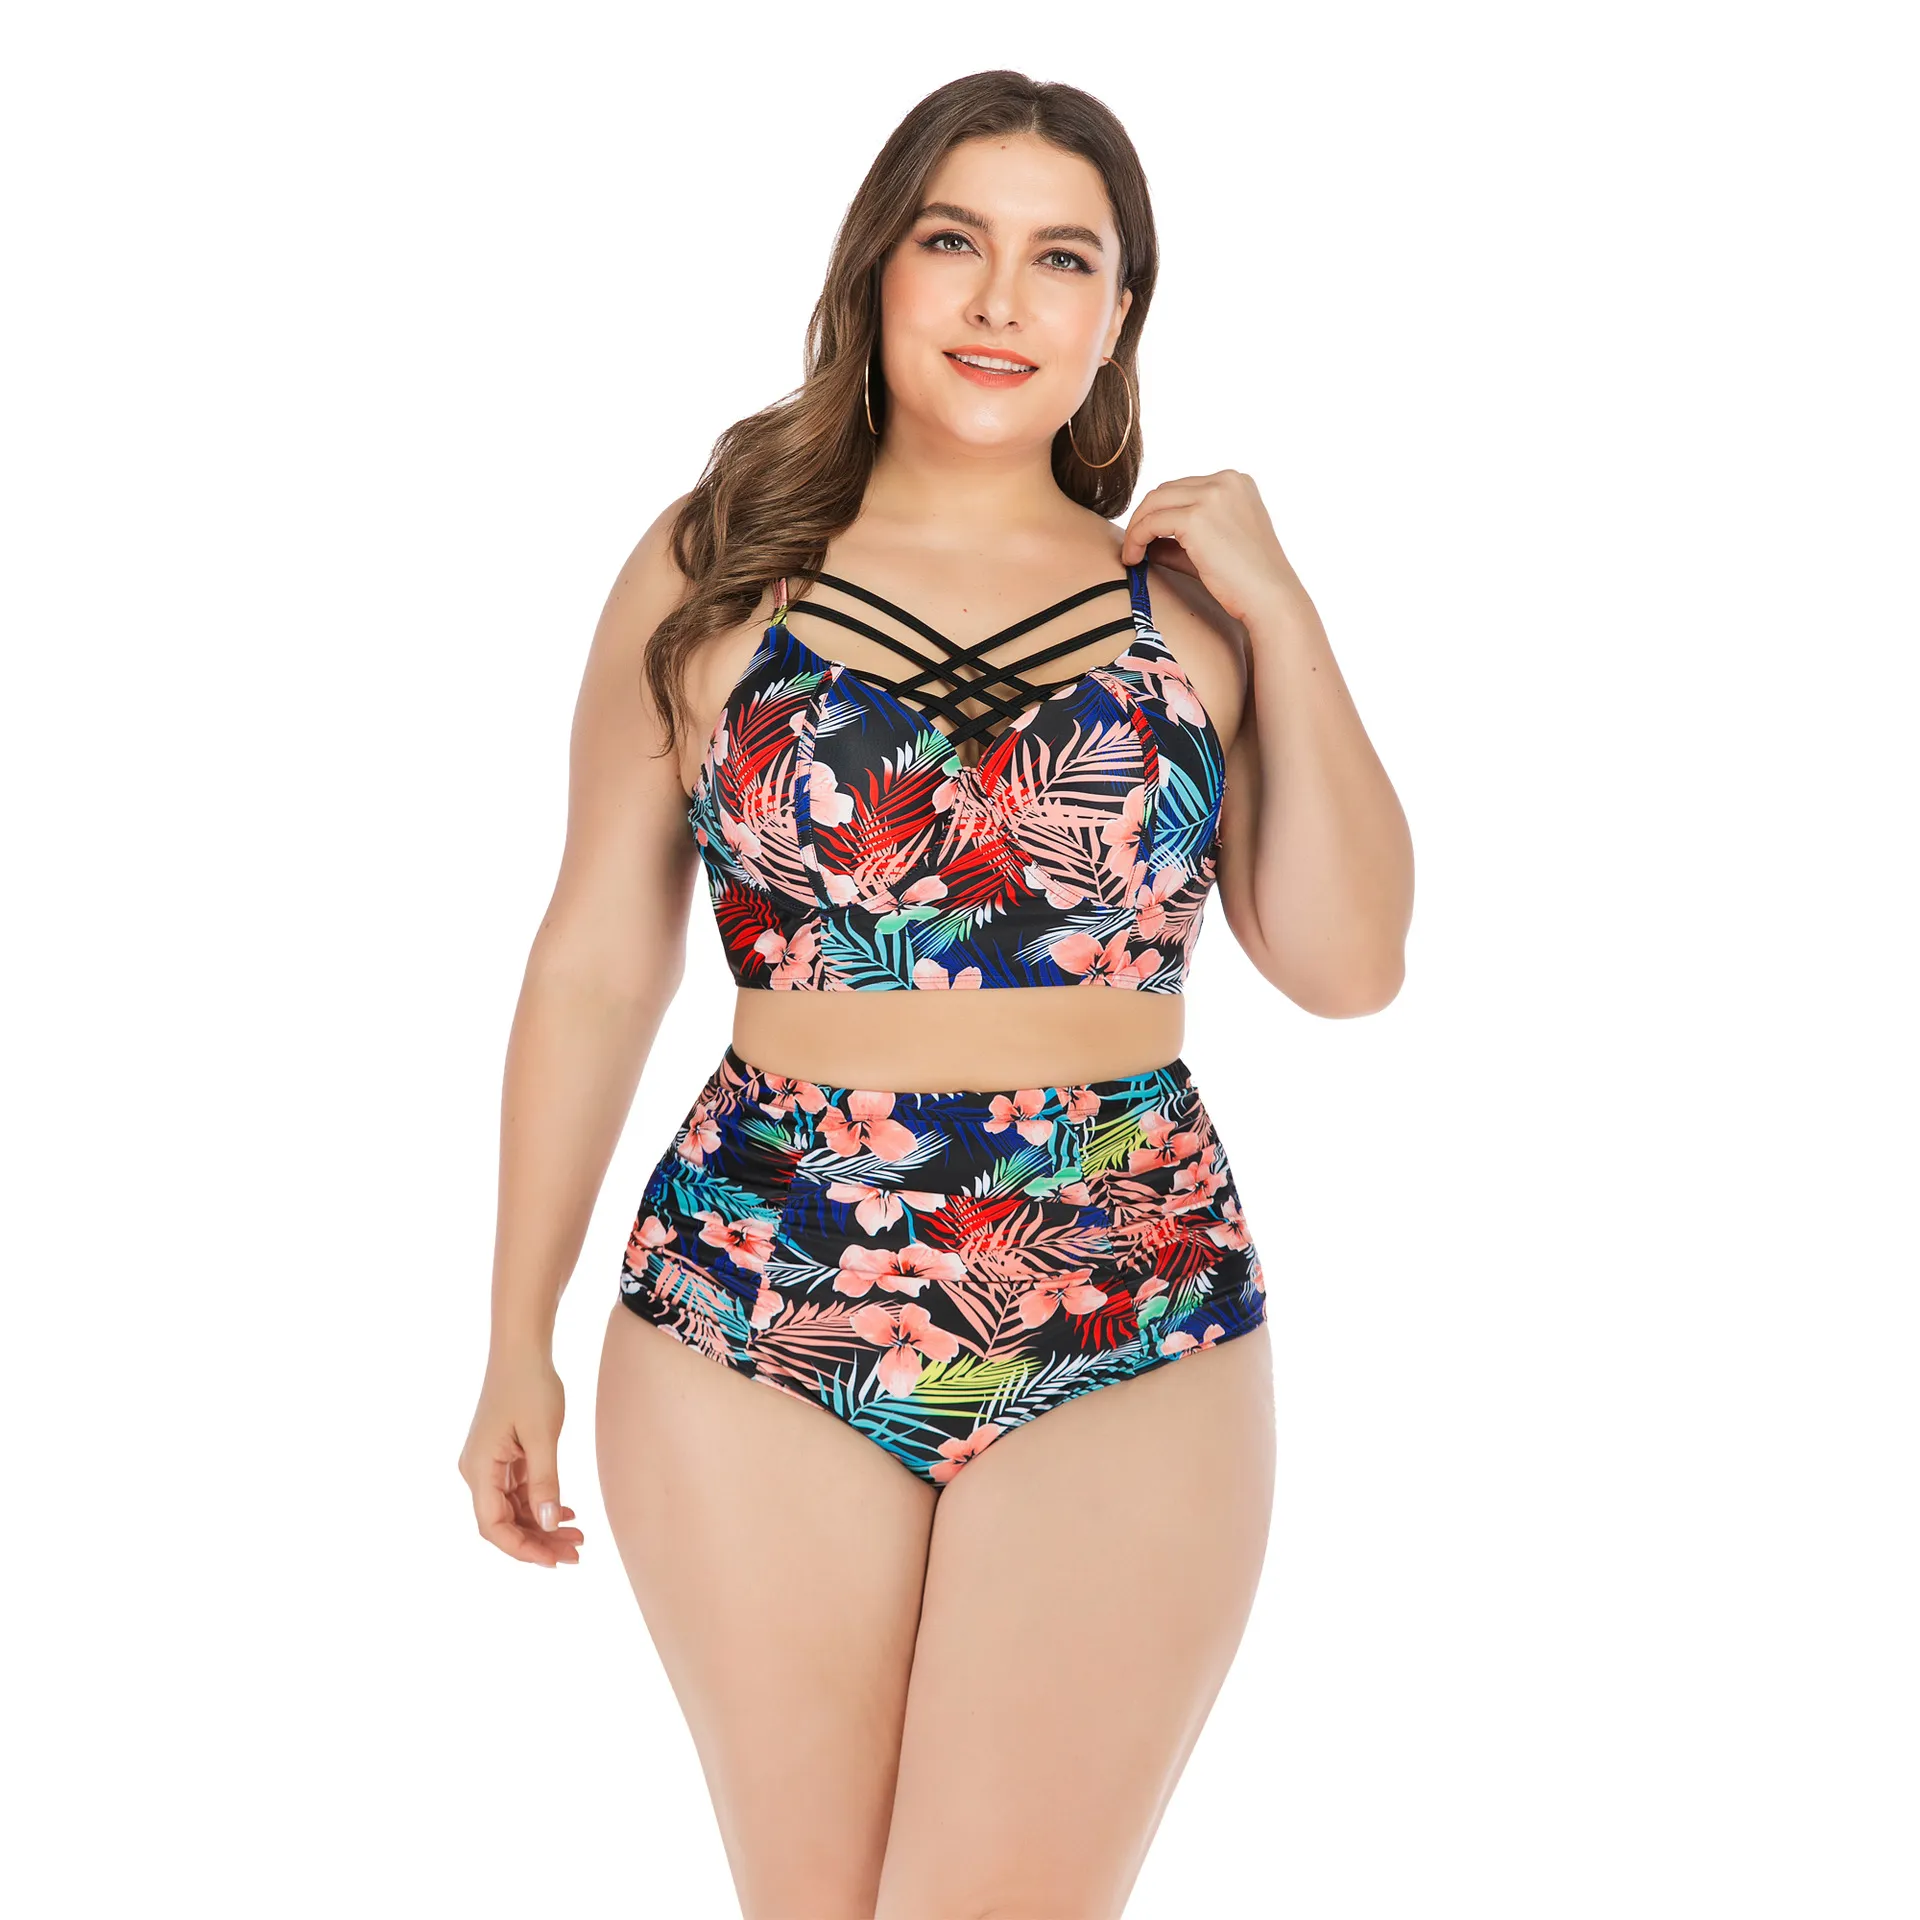 Plus Size Underwire Swim Dress For Women 2019 Two Piece  Plus Size  Swimsuits With Large Size Swimwear From Sporttime, $7.92